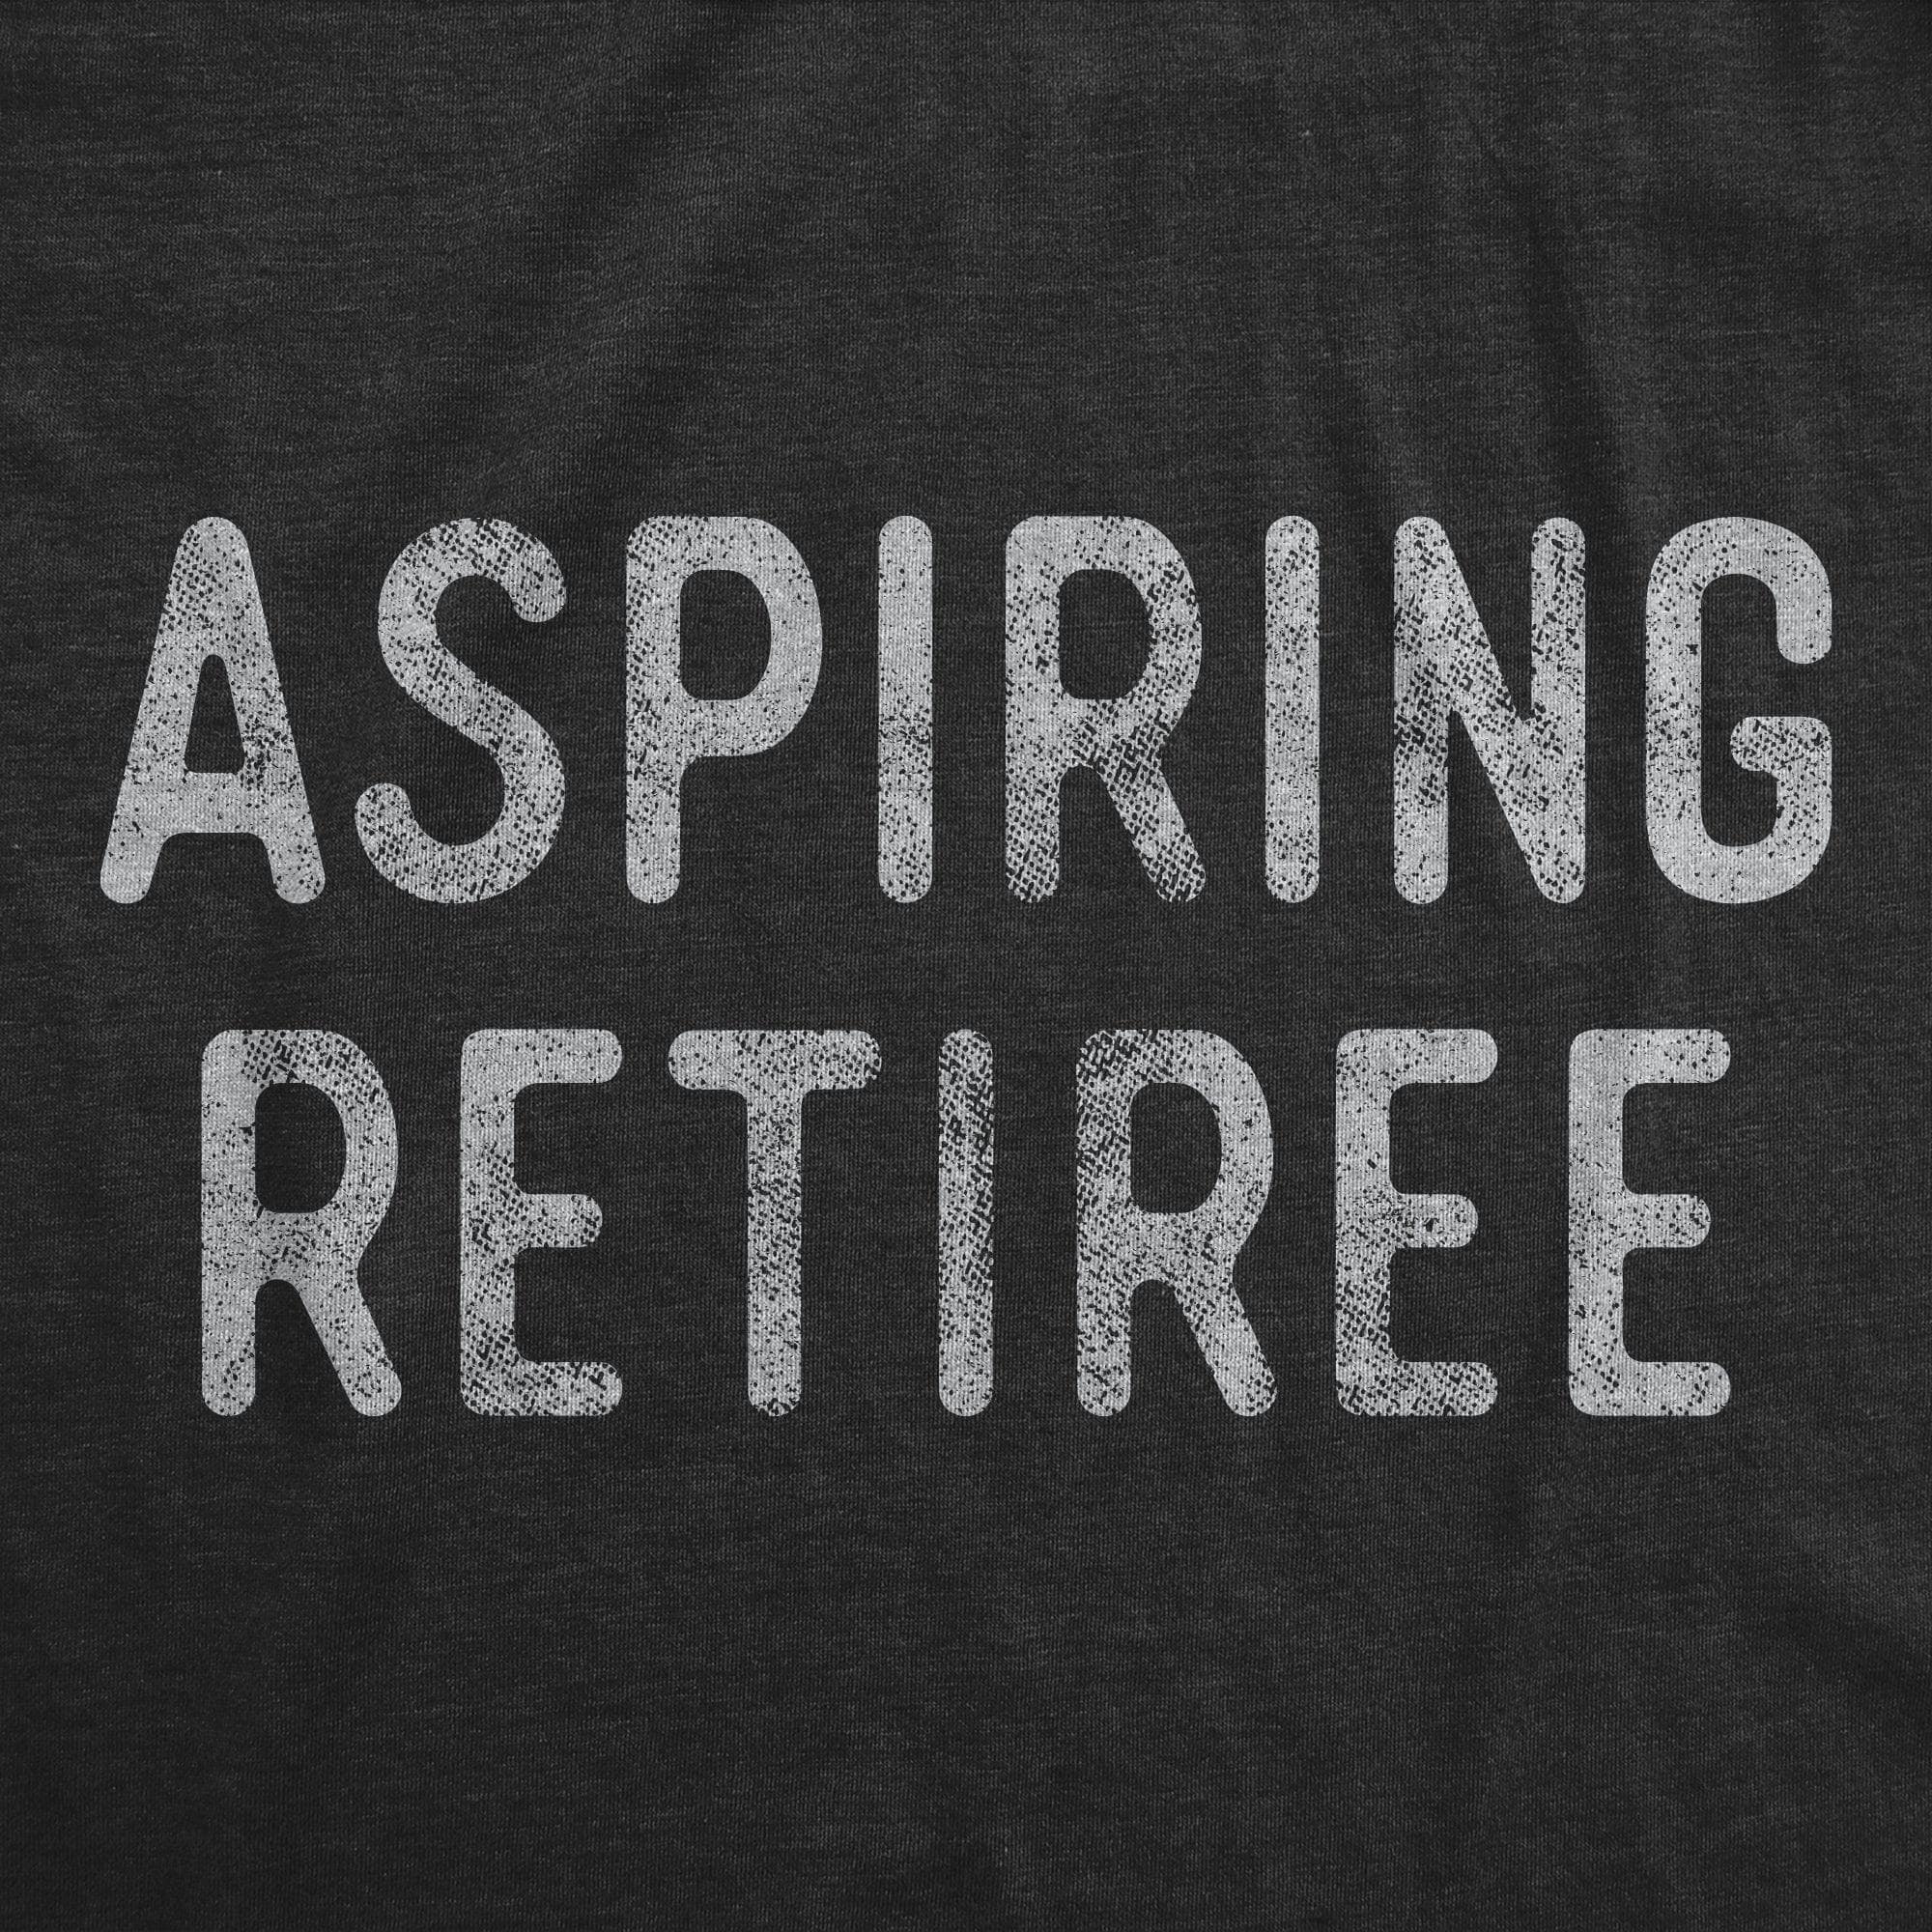 Aspiring Retiree Men's Tshirt  -  Crazy Dog T-Shirts